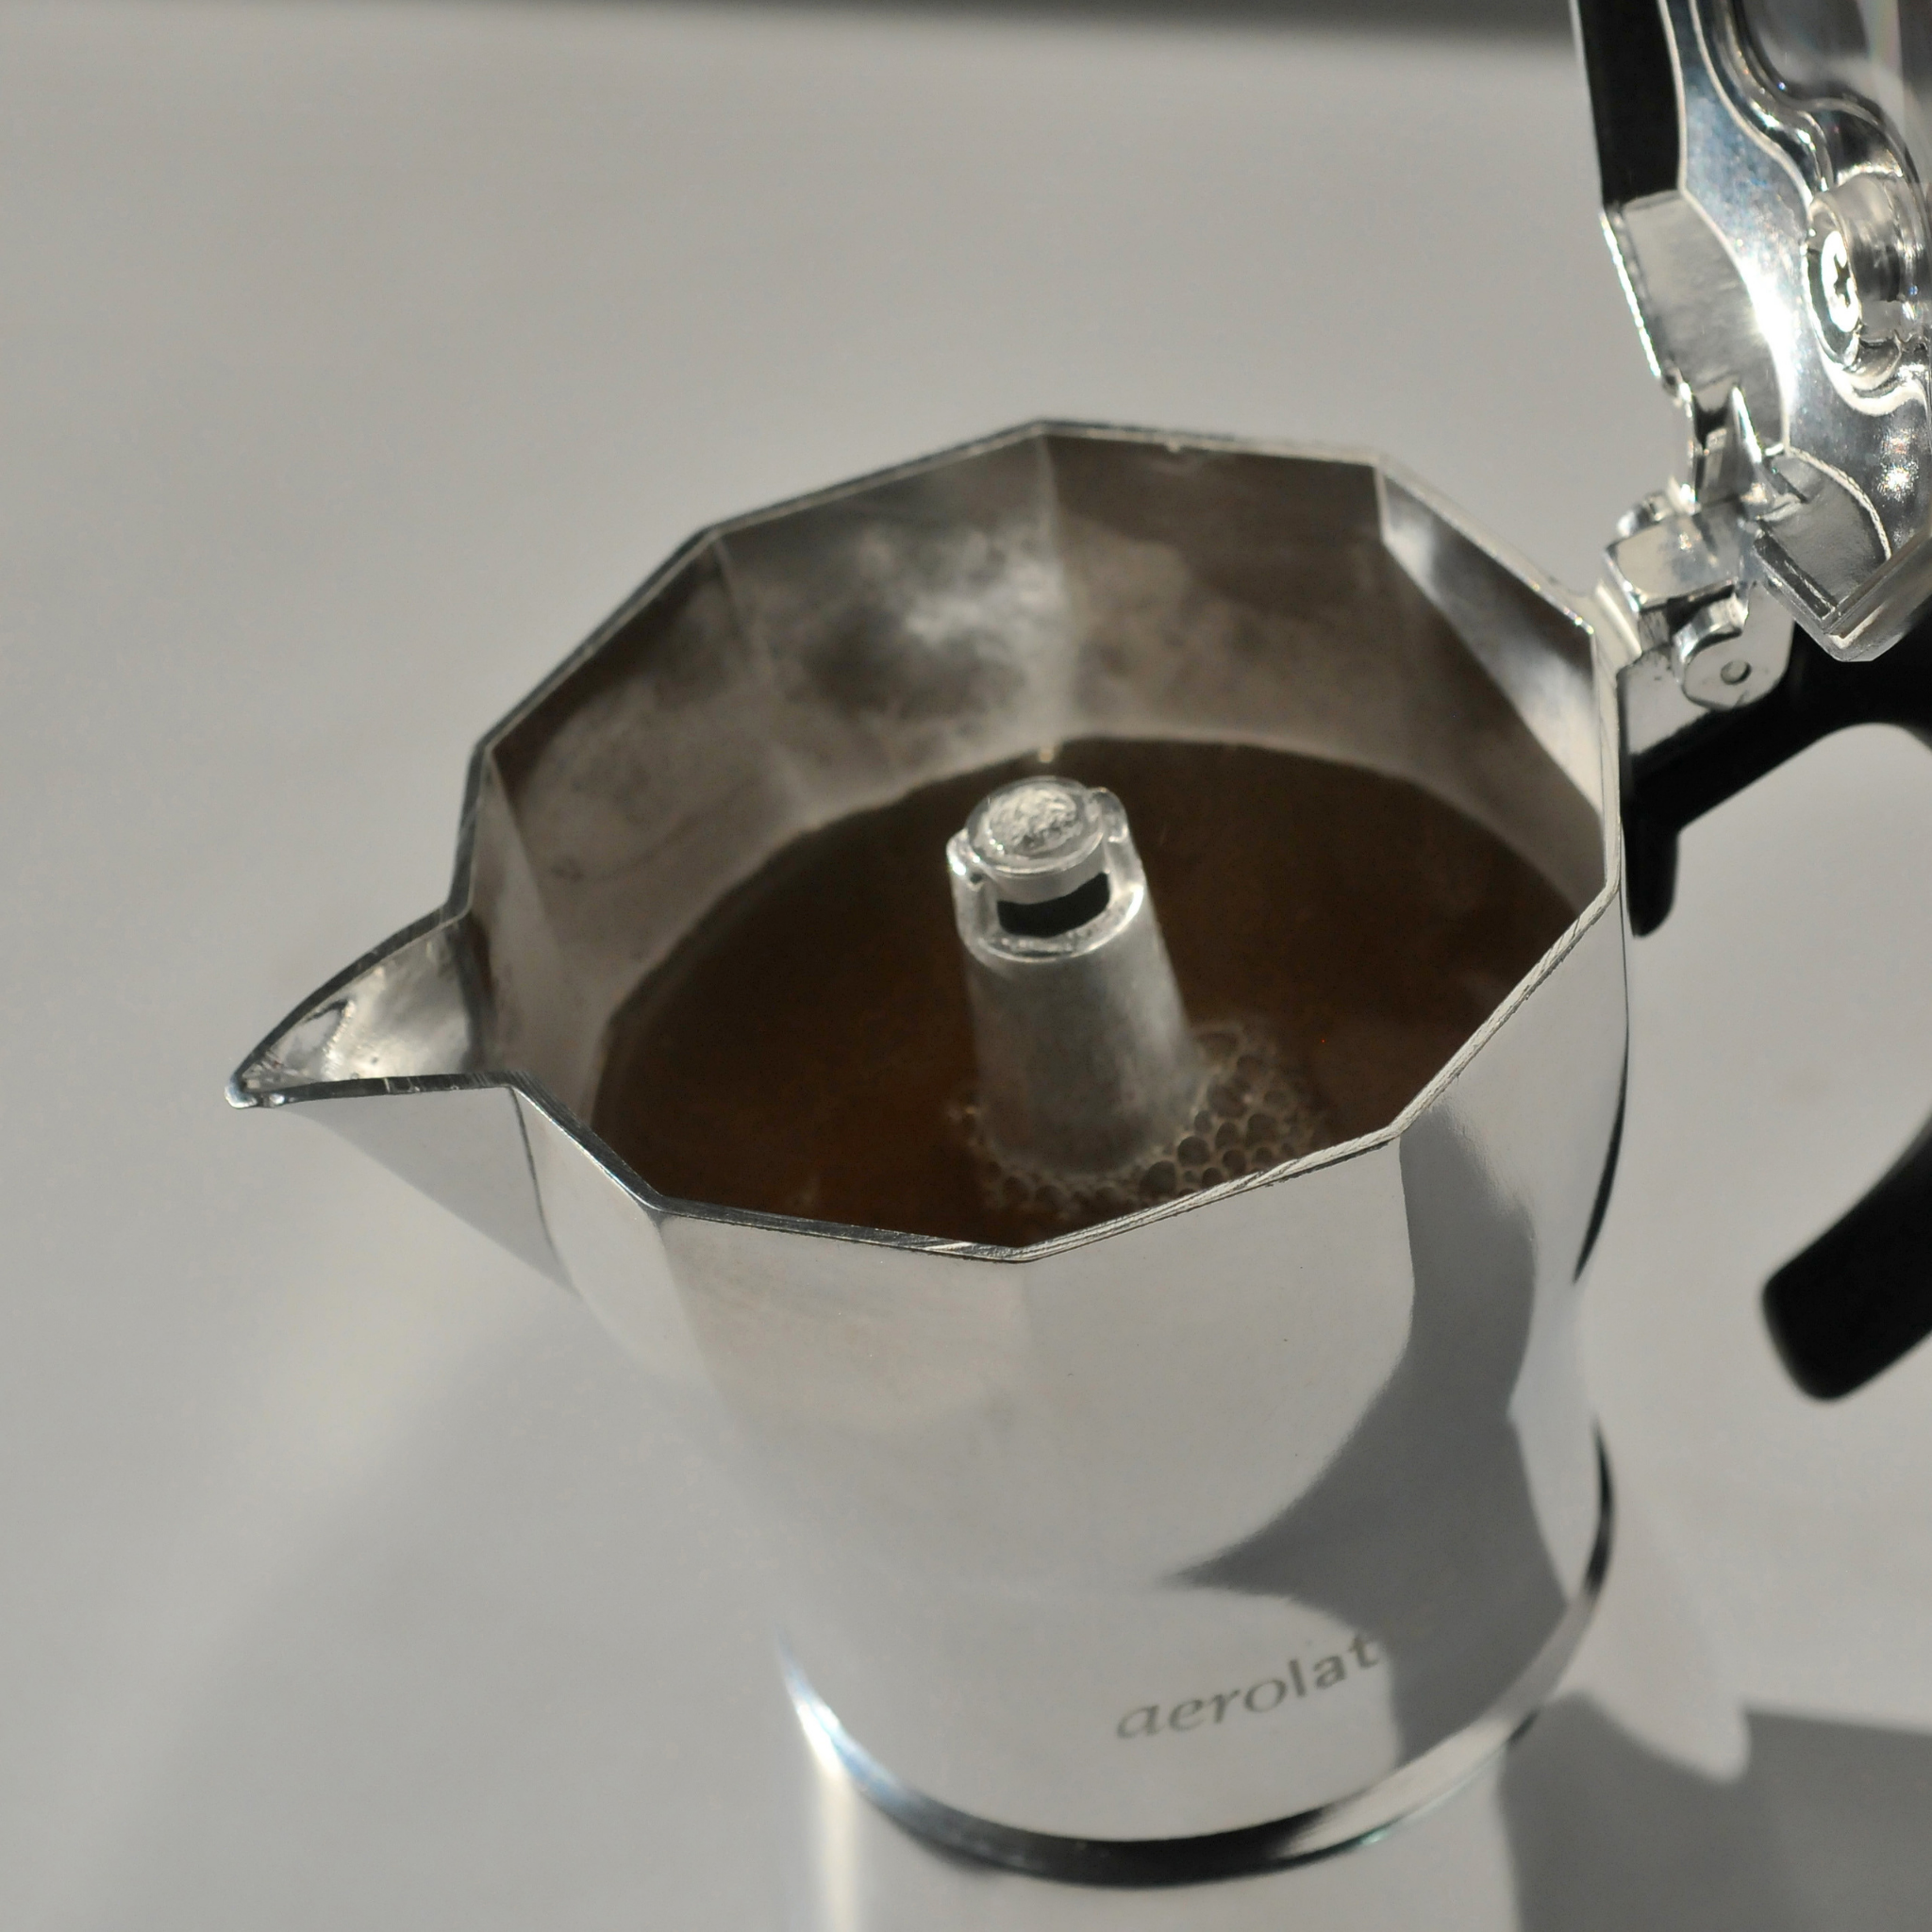 aerolatte 6-Cup MokaVista/Stovetop Espresso Maker